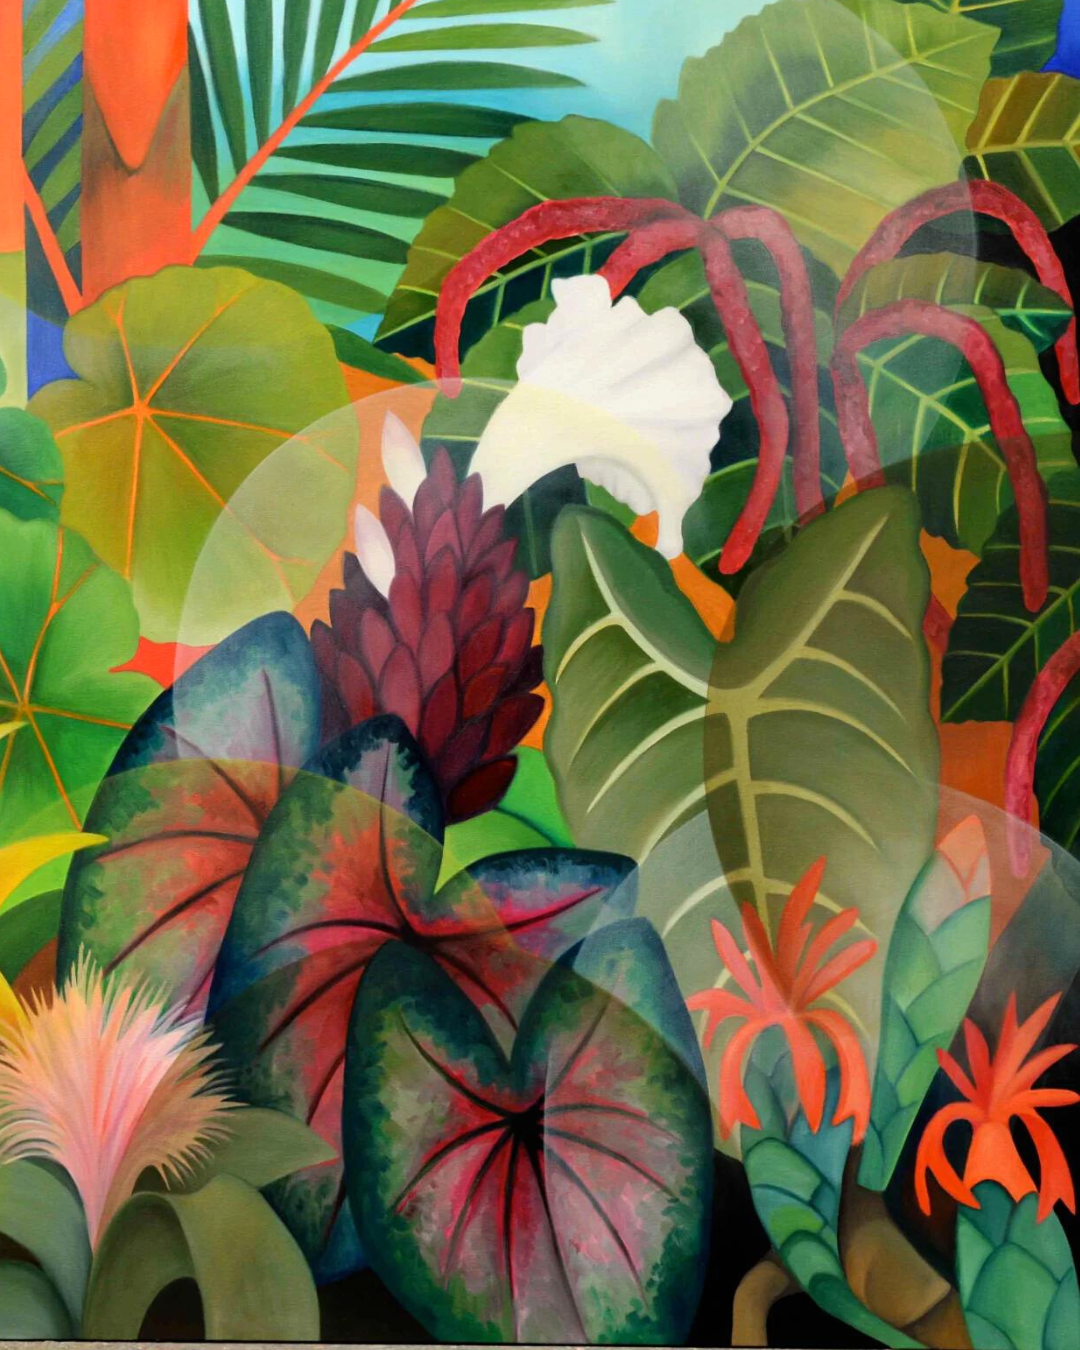 Senaka Senanayake. Rainforest, 2014. Oil on canvas. Courtesy of Grosvenor Gallery.